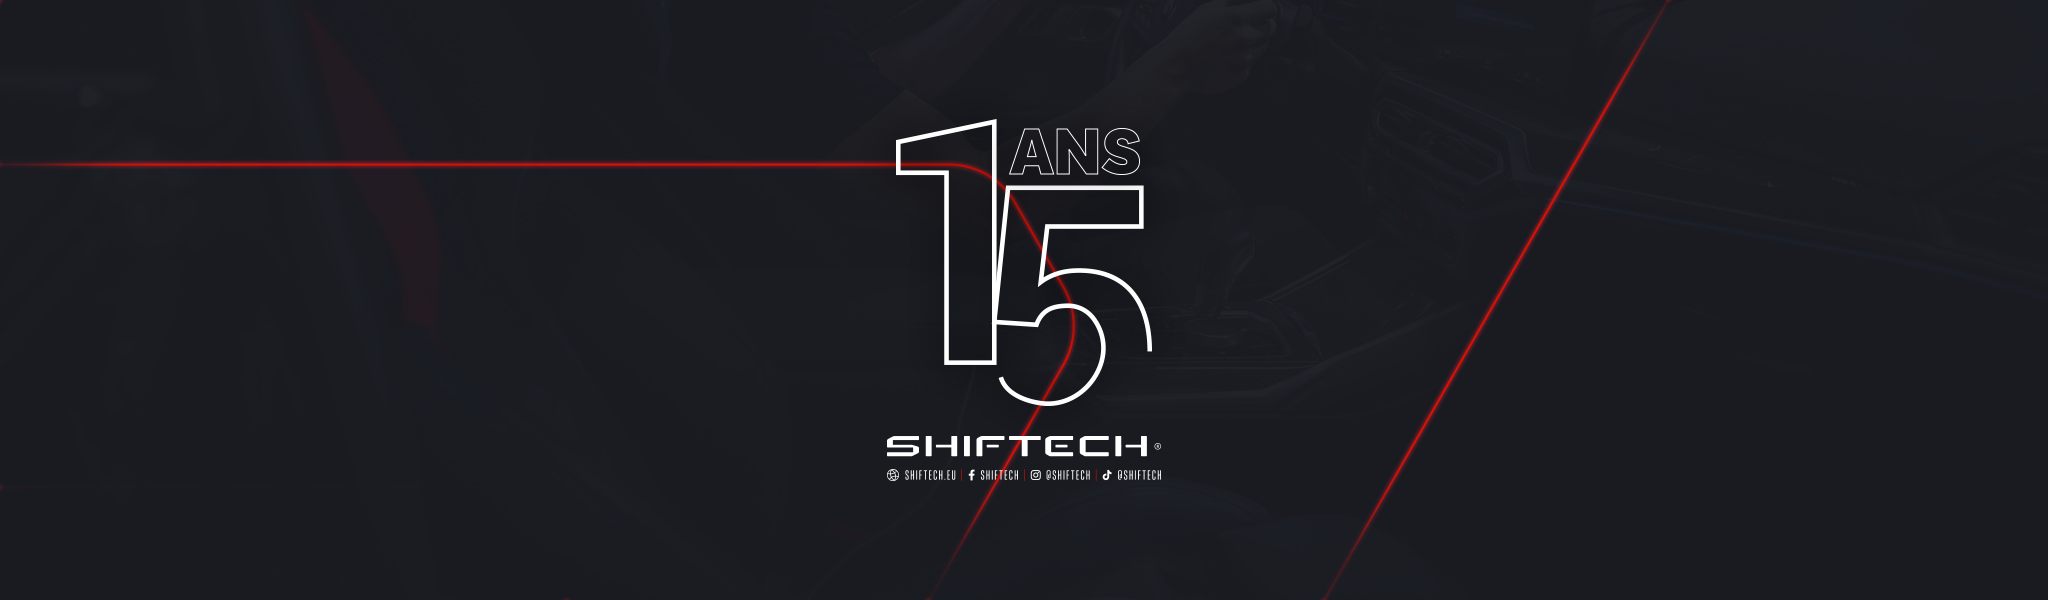 Shiftech reprogrammation moteur 15 ans marque histoire 2000